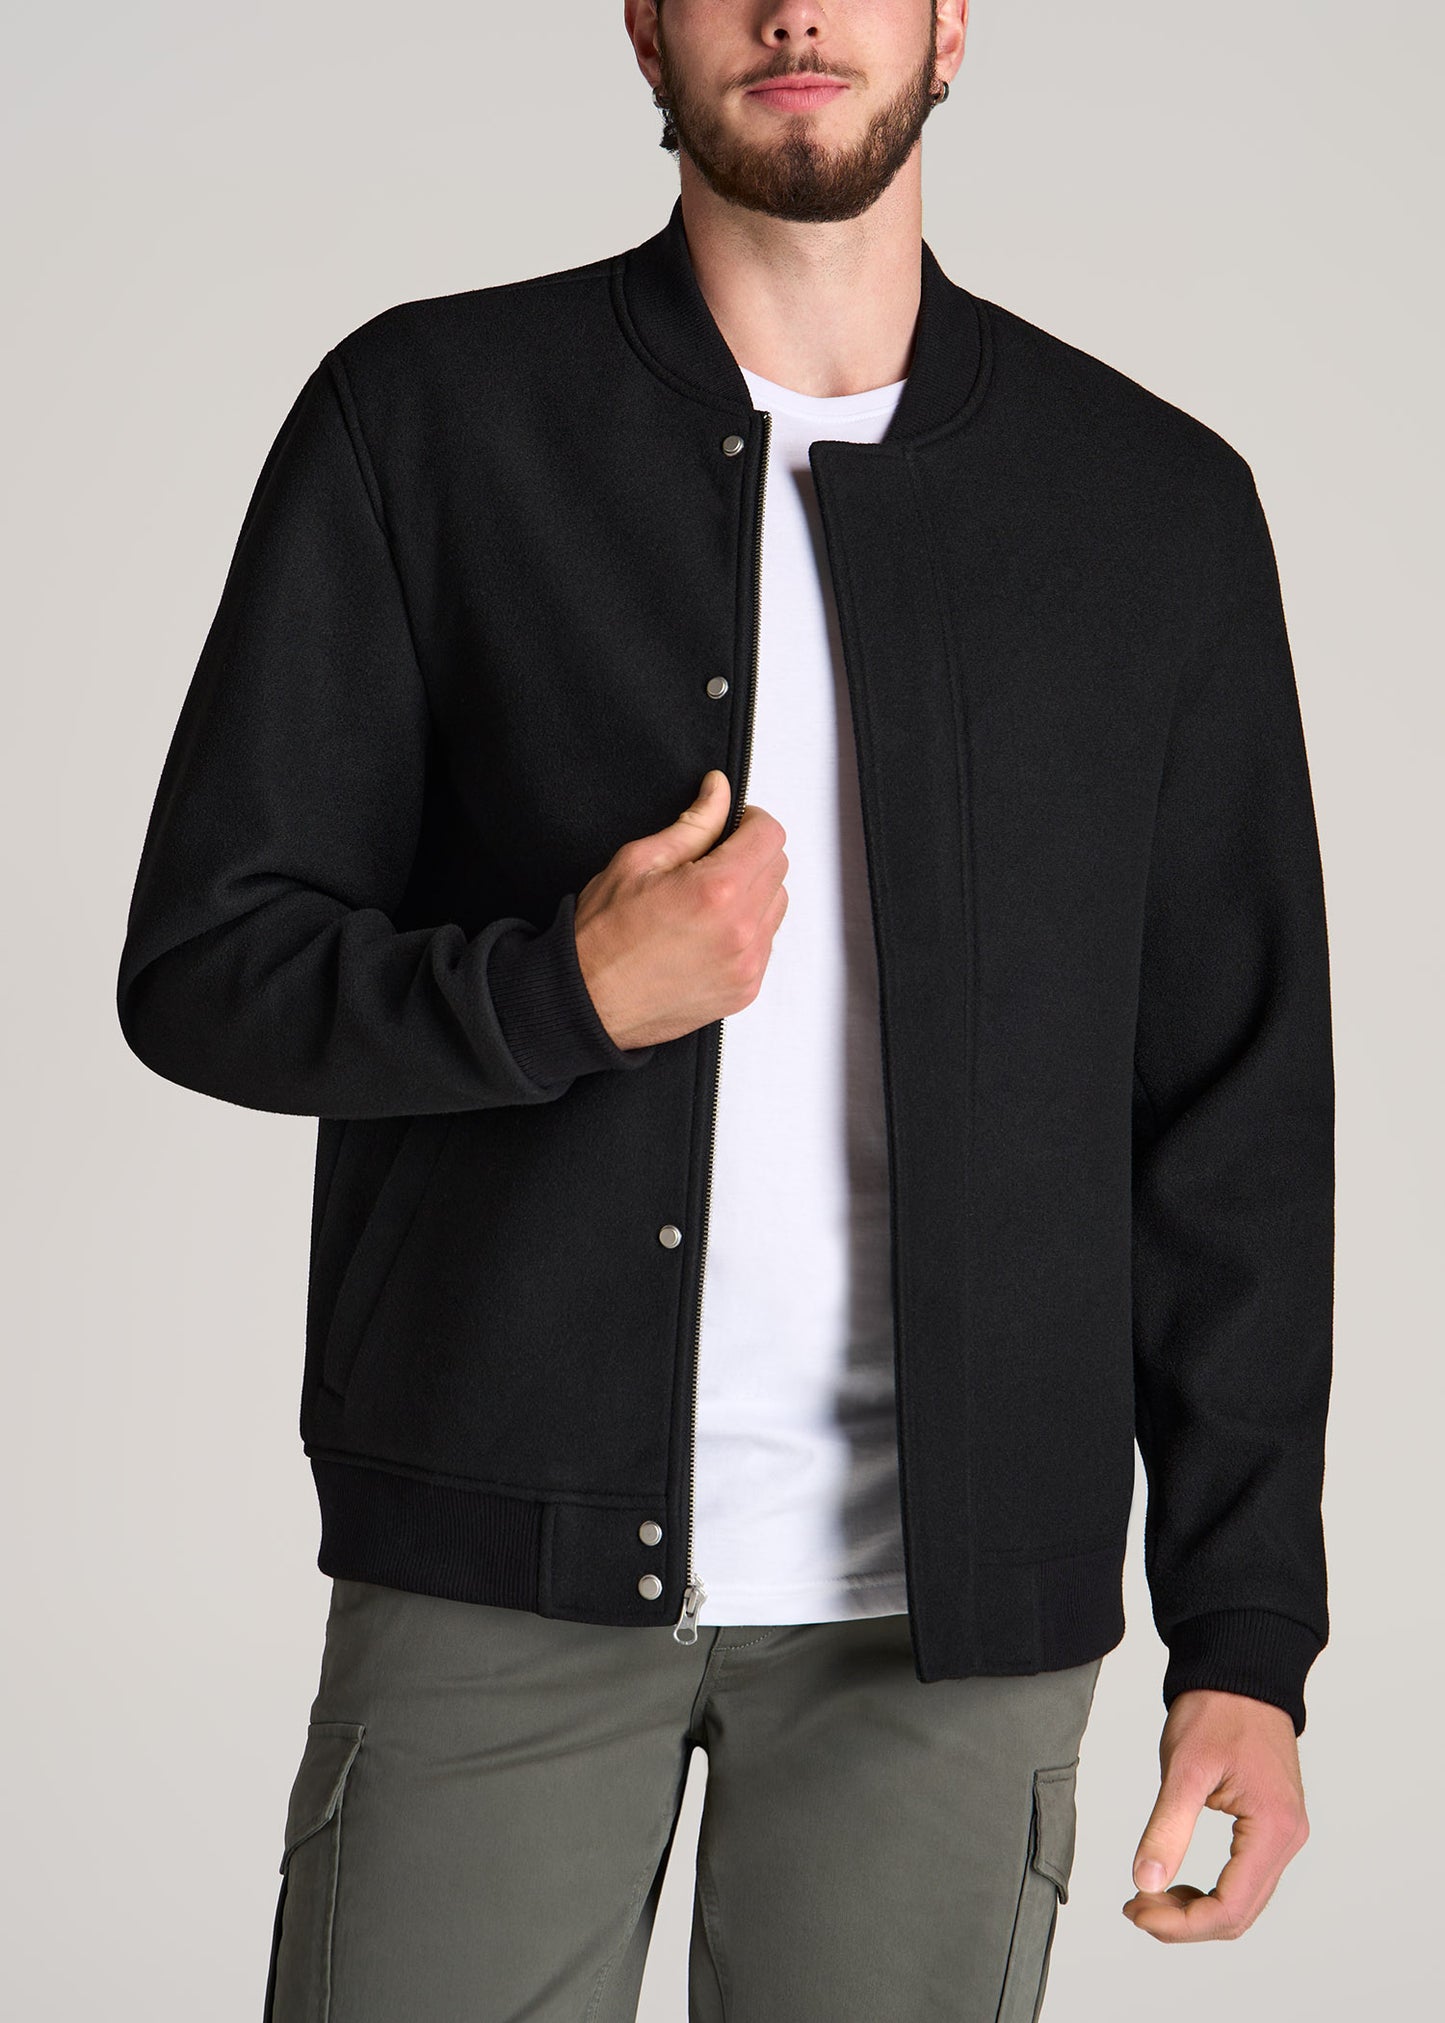 Buy Black Jackets & Coats for Men by VOXATI Online | Ajio.com